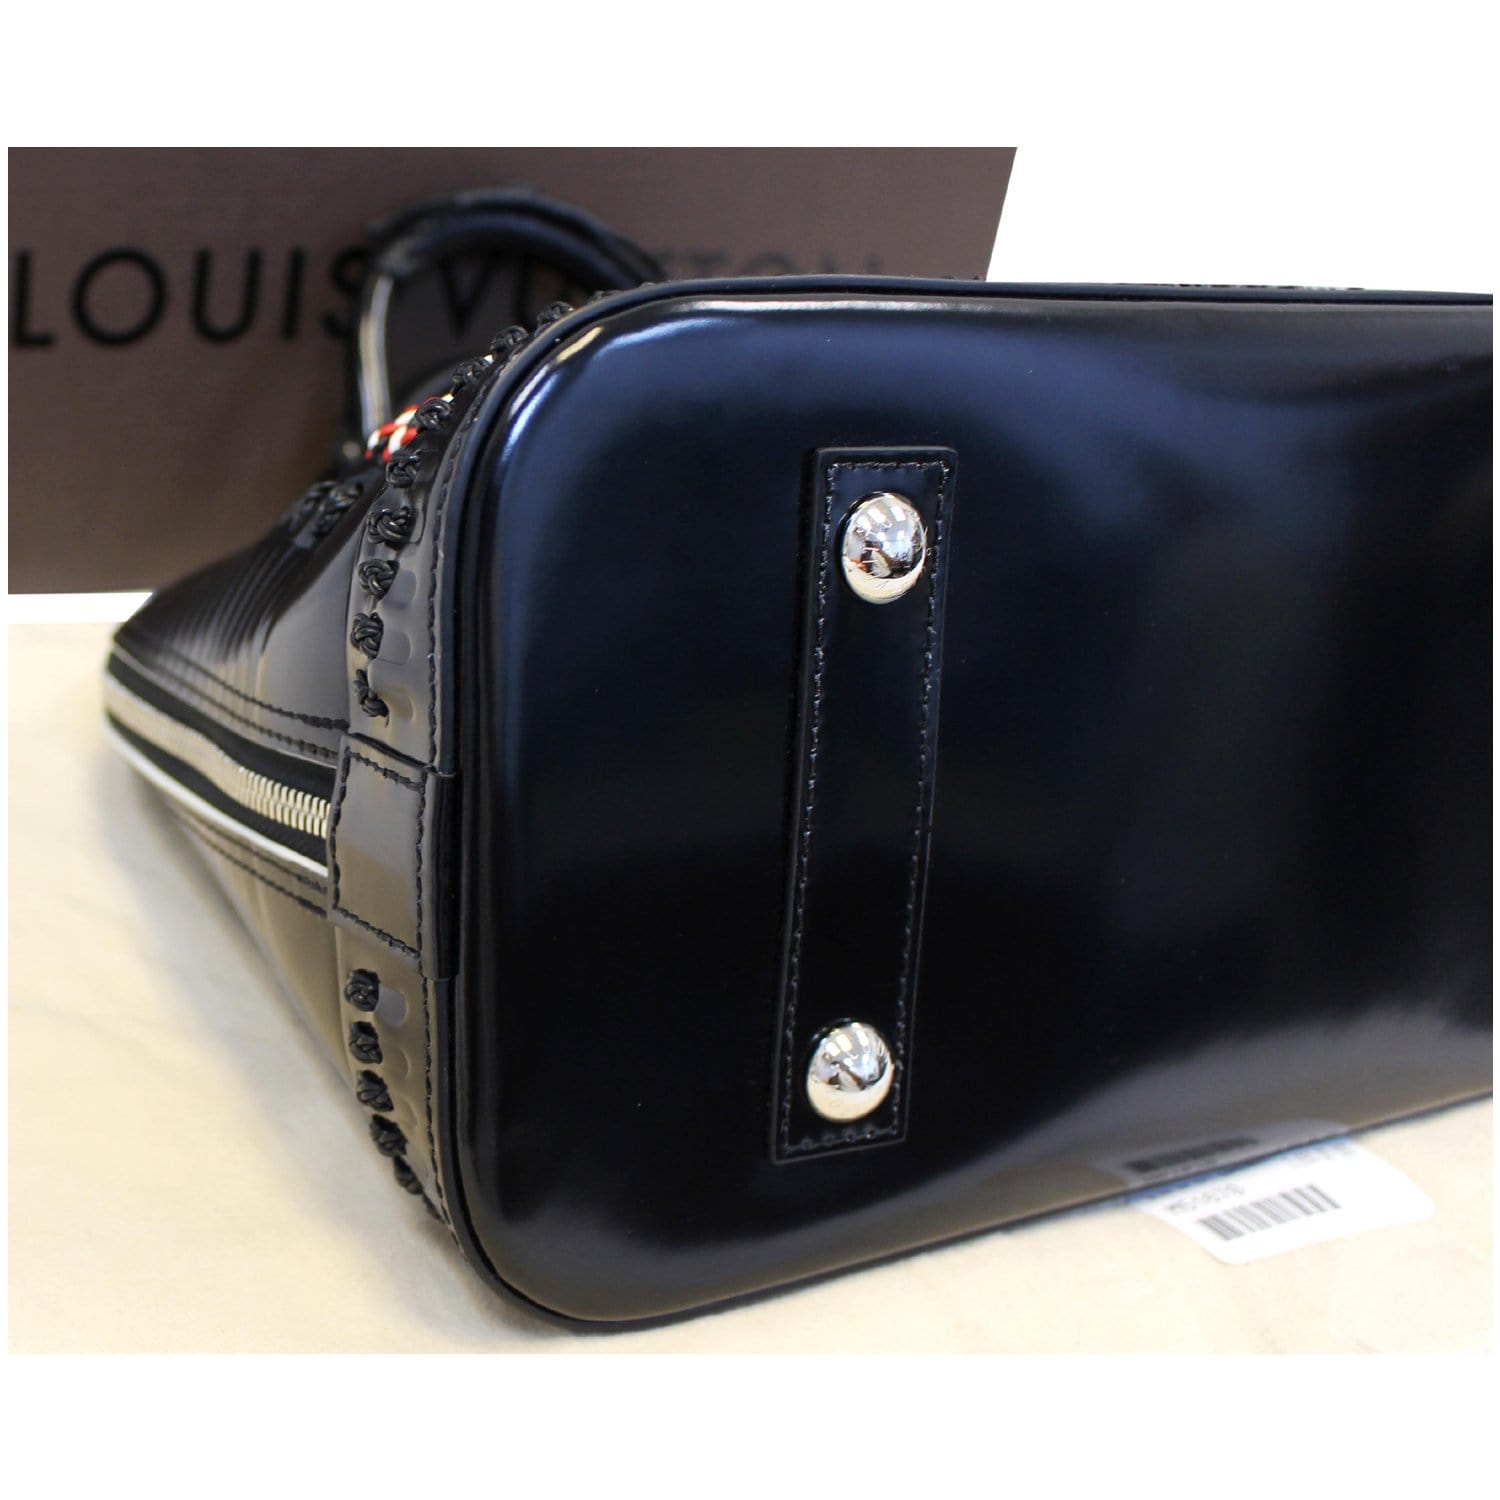 Louis Vuitton, Bags, Louis Vuitton Alma Pm Black Patent Leather Tote